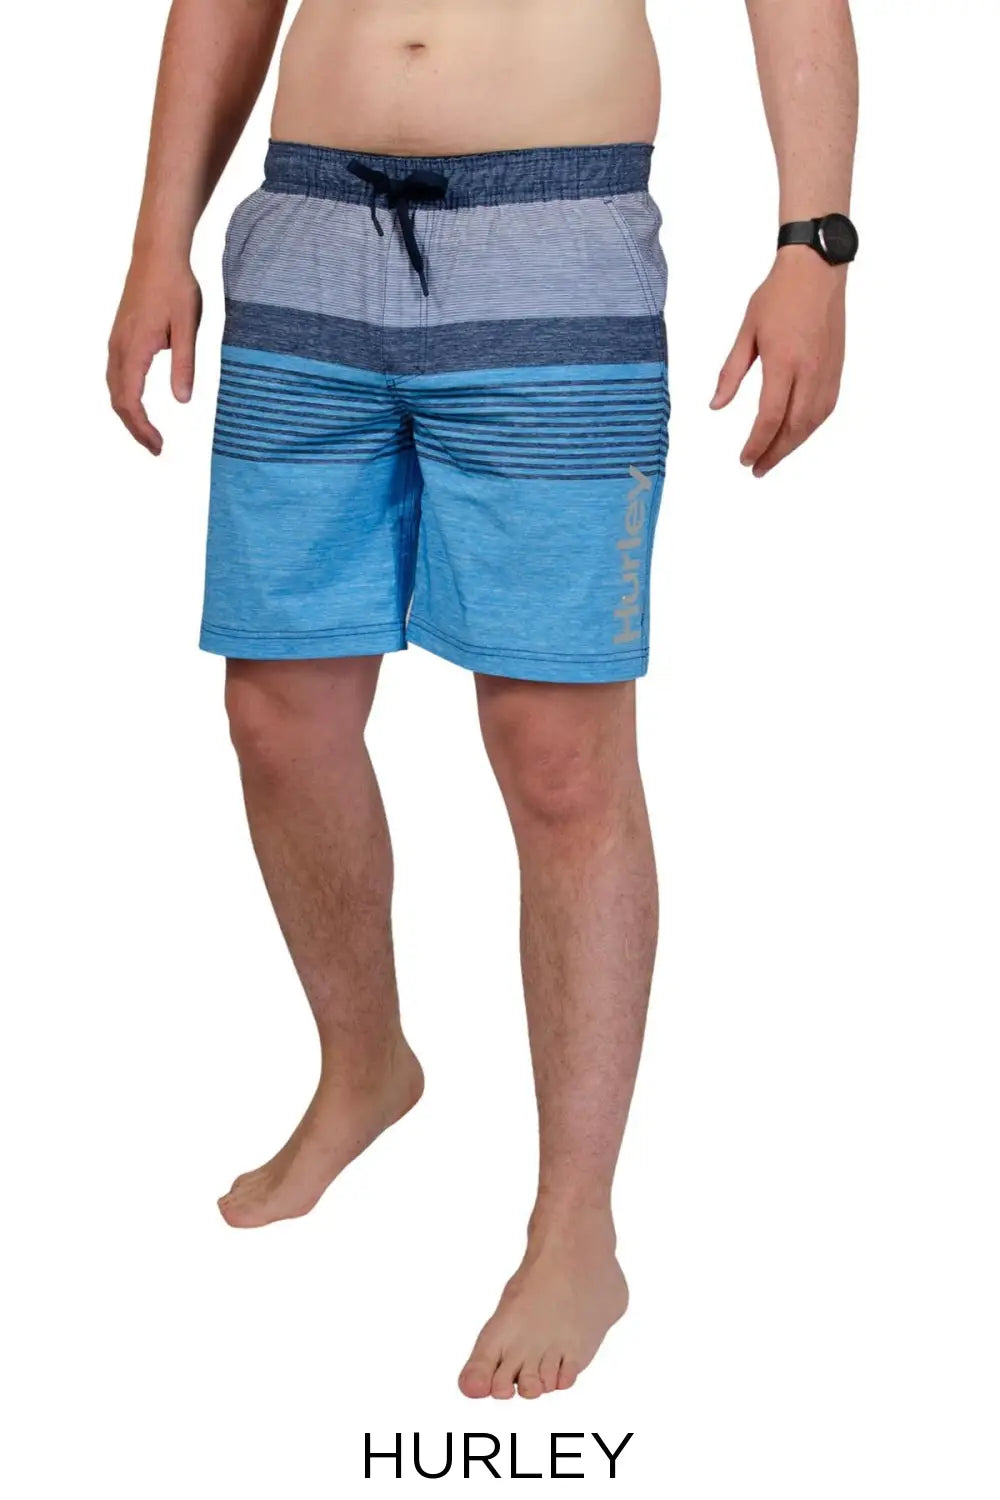 Hurley Board Shorts Swim Trunks Blue Mix / XL